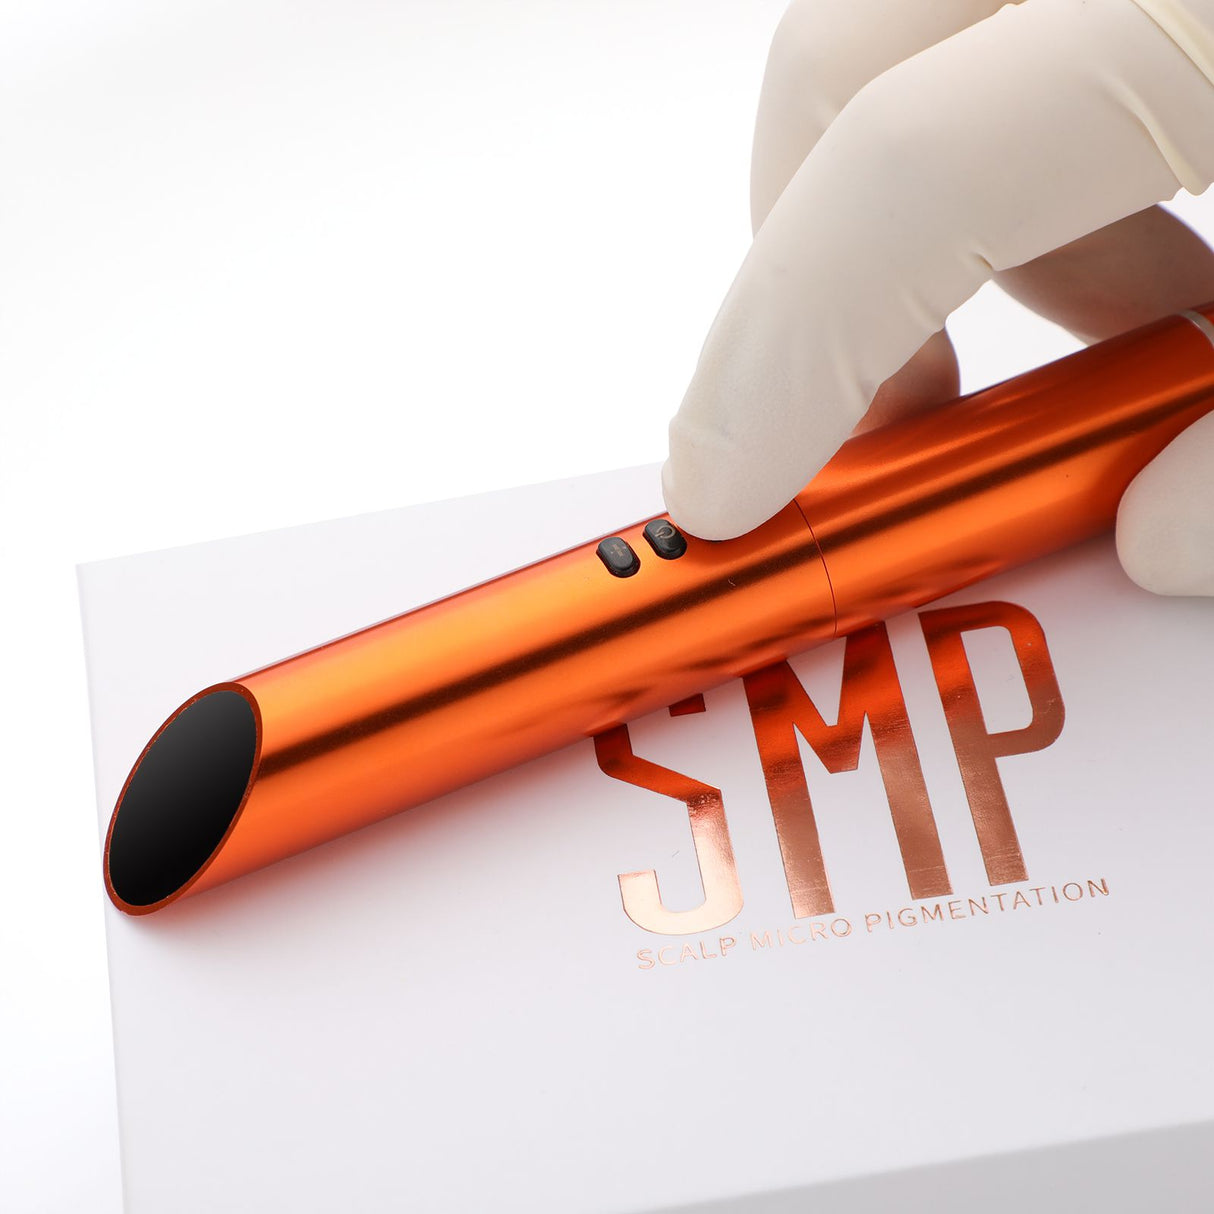 SMP® Scalp Micropigmentation and Permanent Makeup Wireless Machine